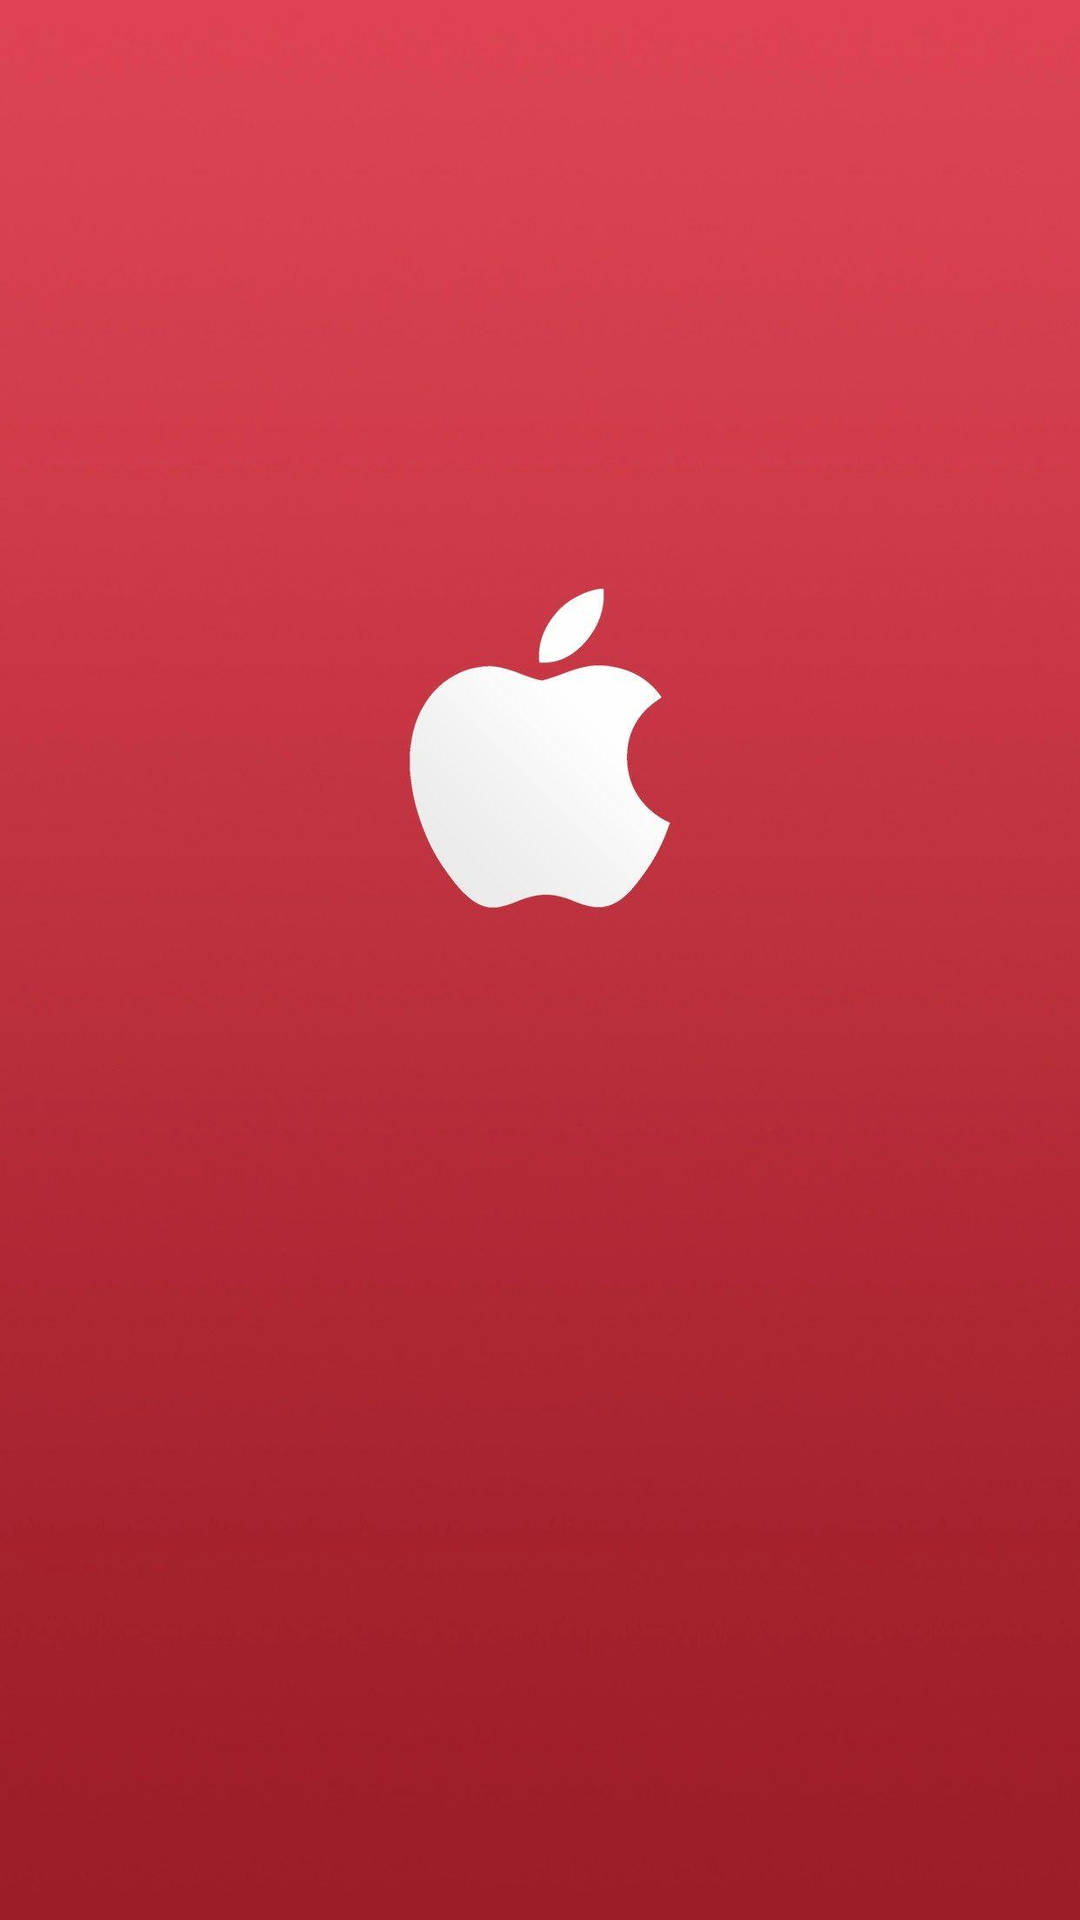 Iphone X Original White Apple Logo On Red Wallpaper